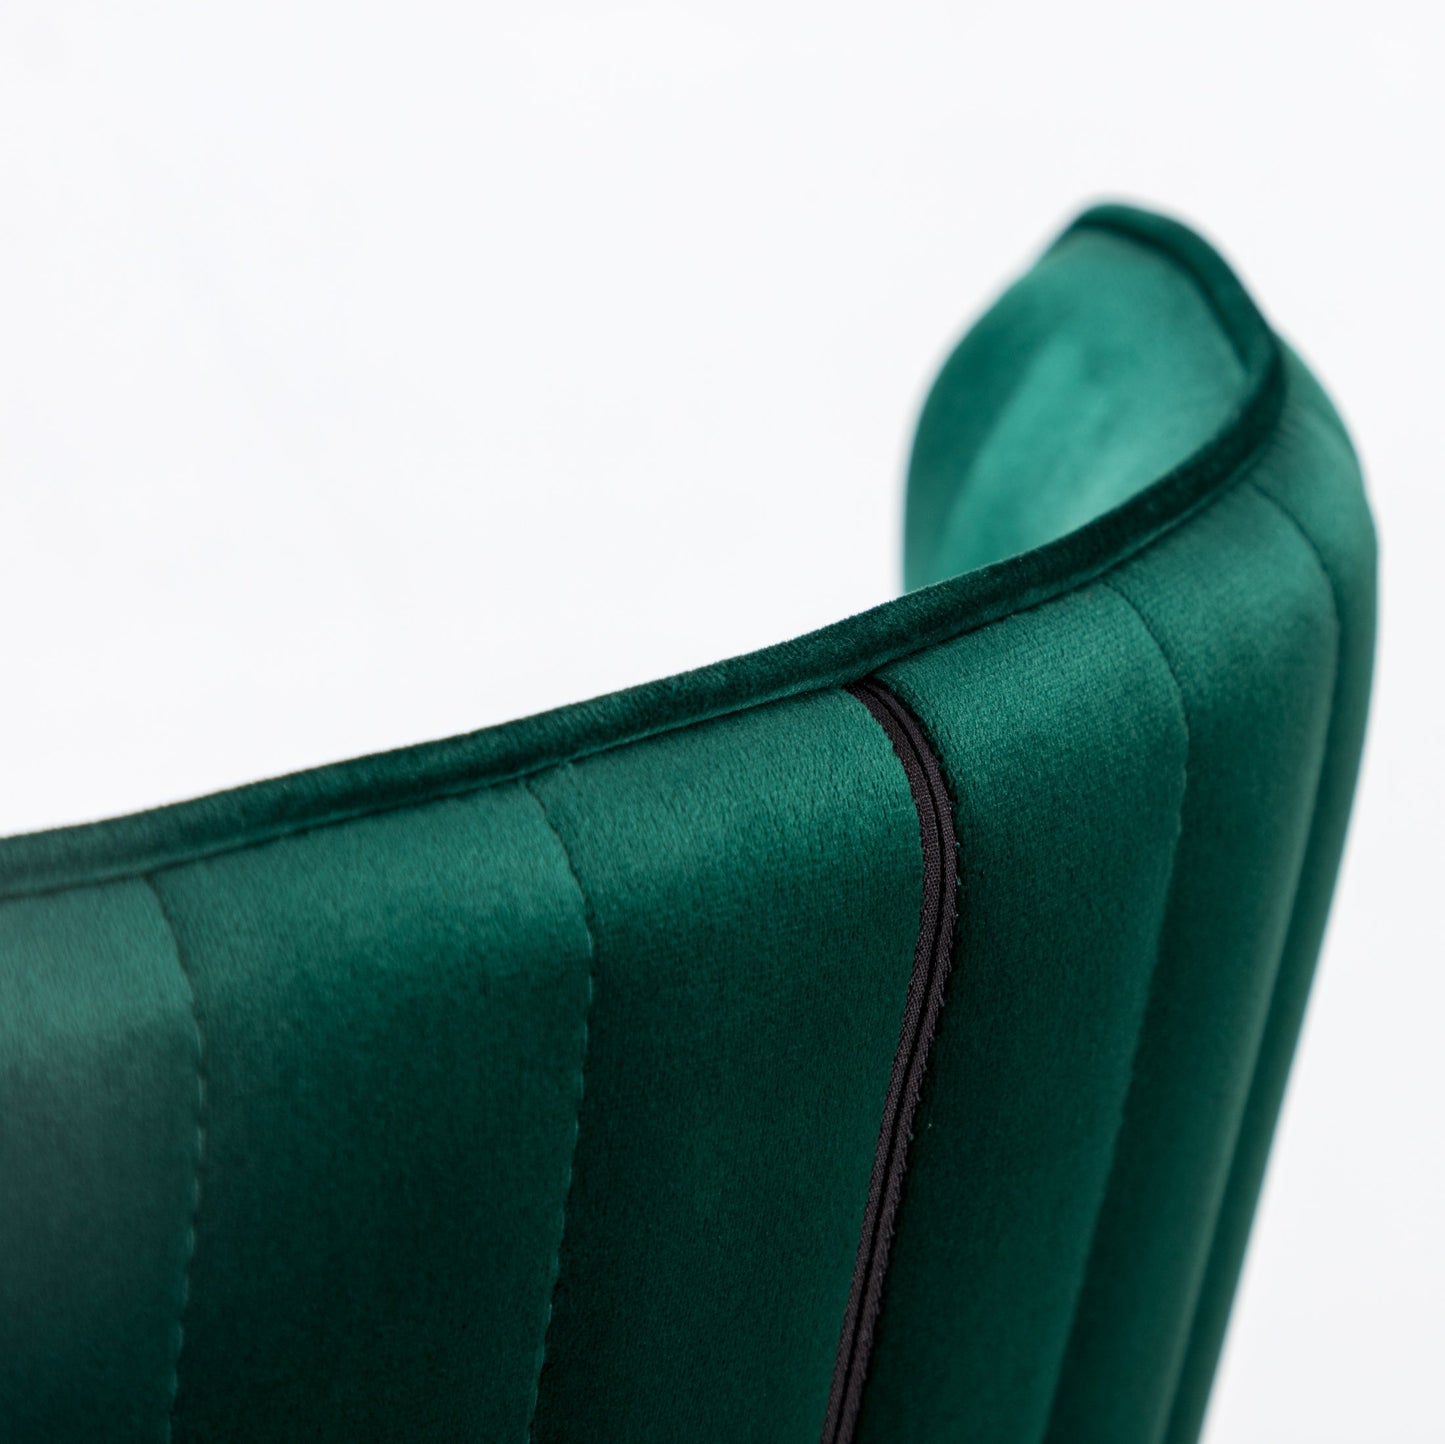 Leland Fabric Upholstered Wingback Bar Stools, Set of 2, Green